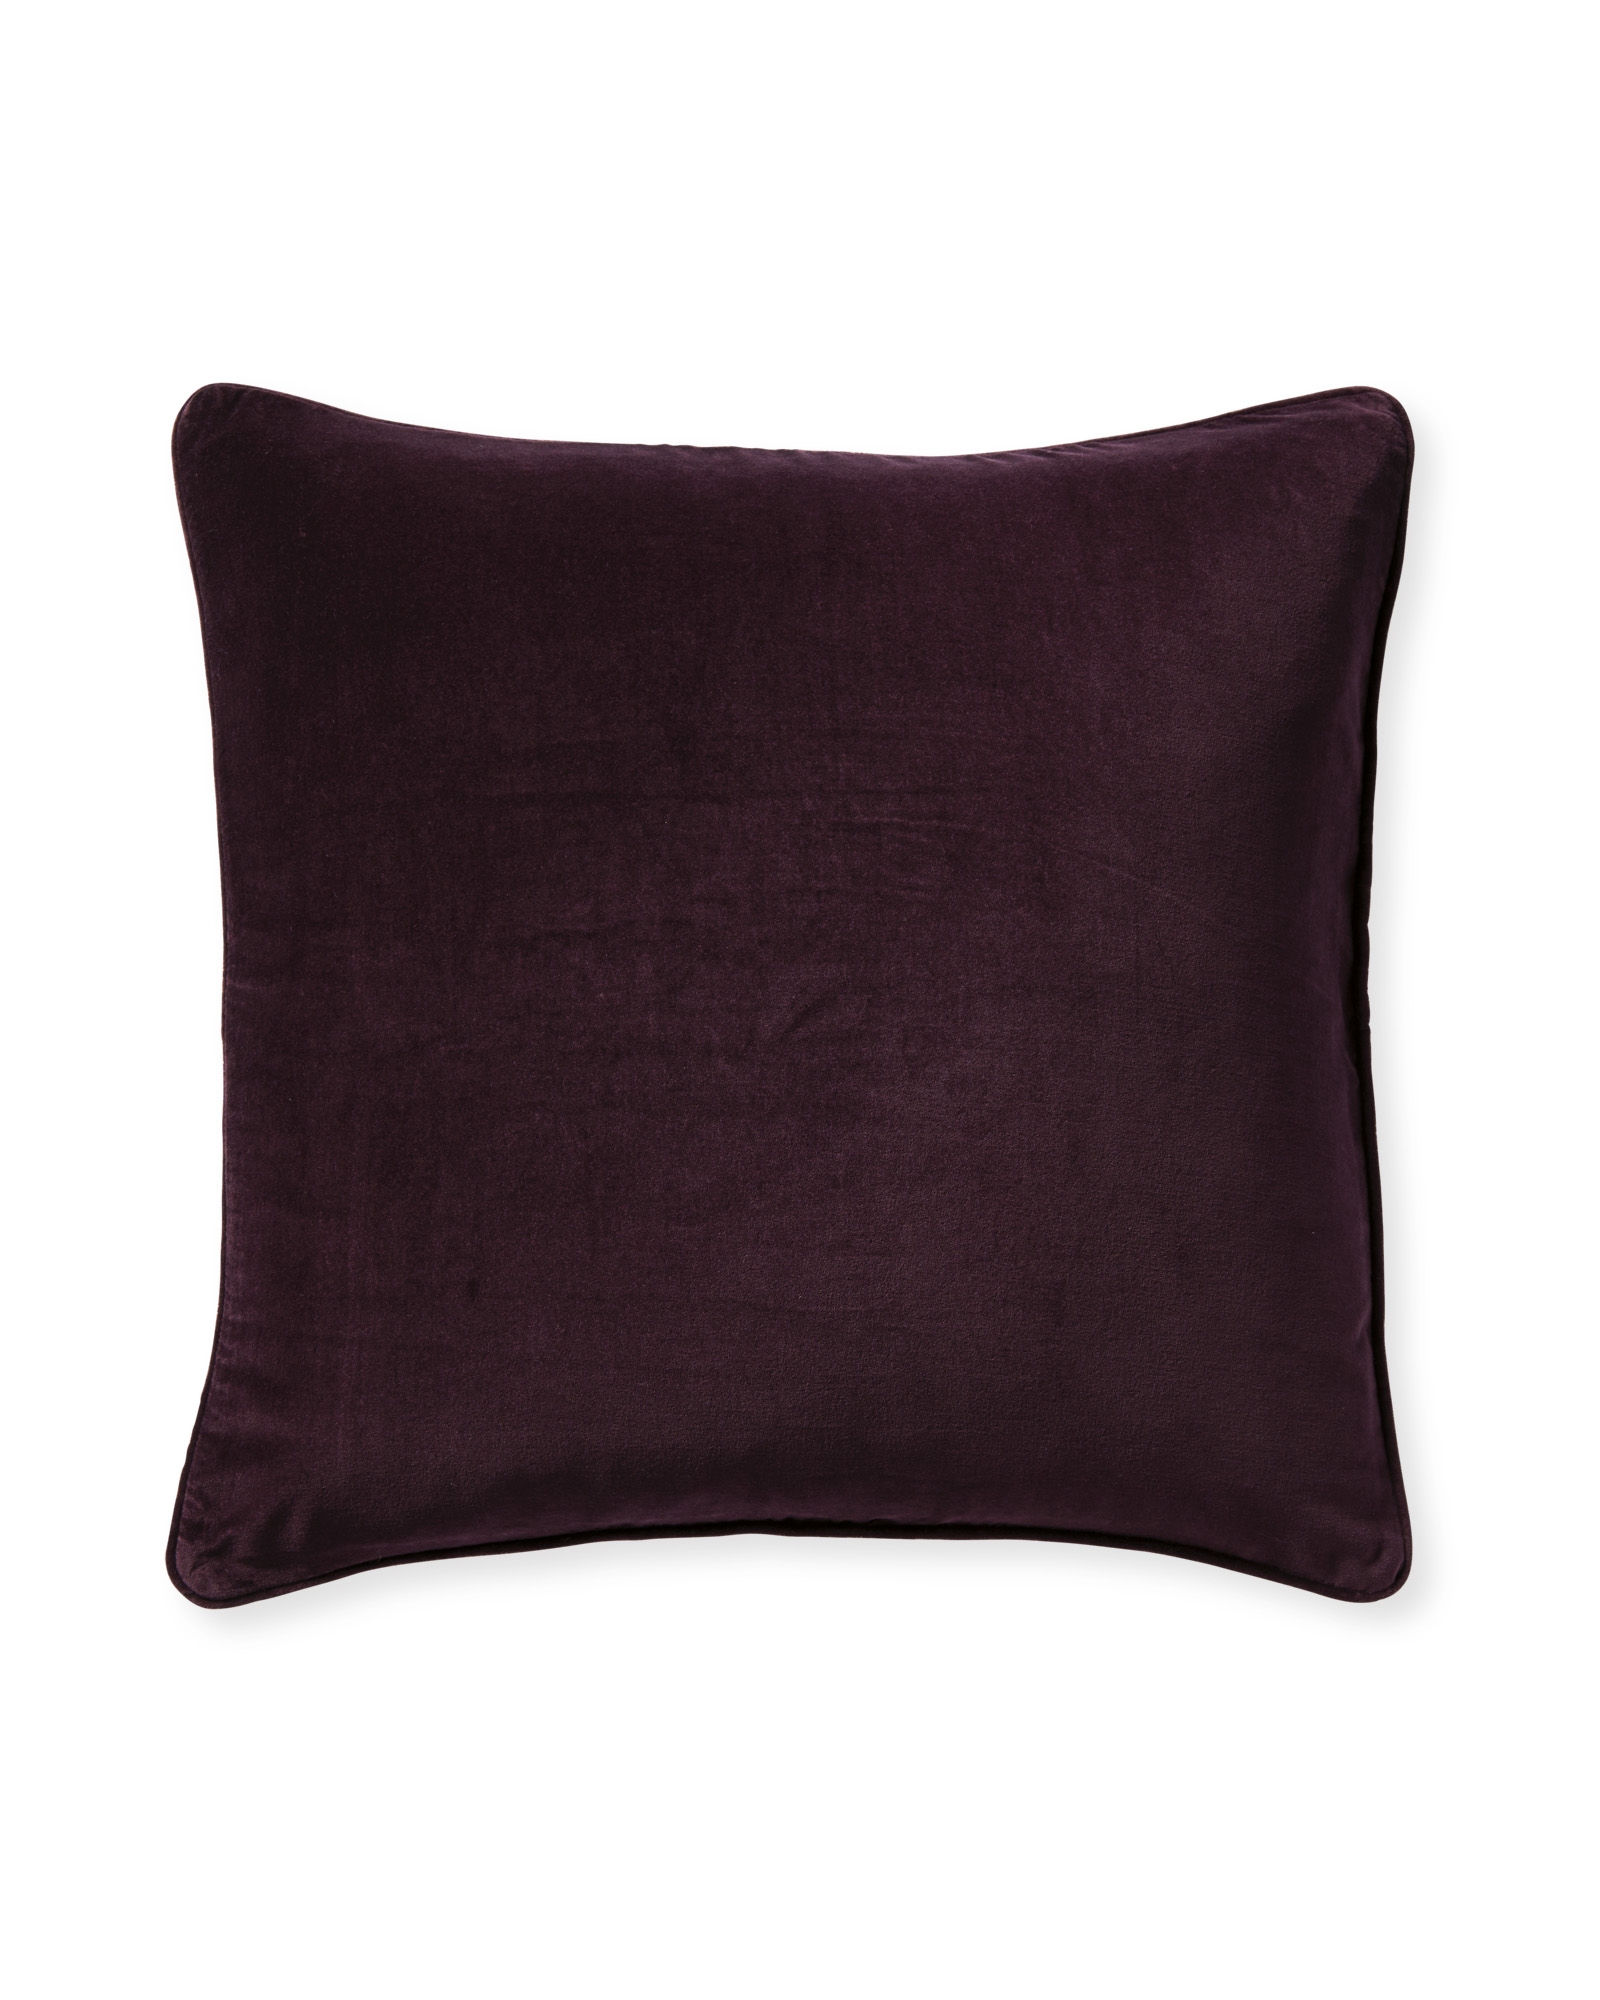 Kingsbury Pillow Cover in Merlot - 22"x22" - Image 0